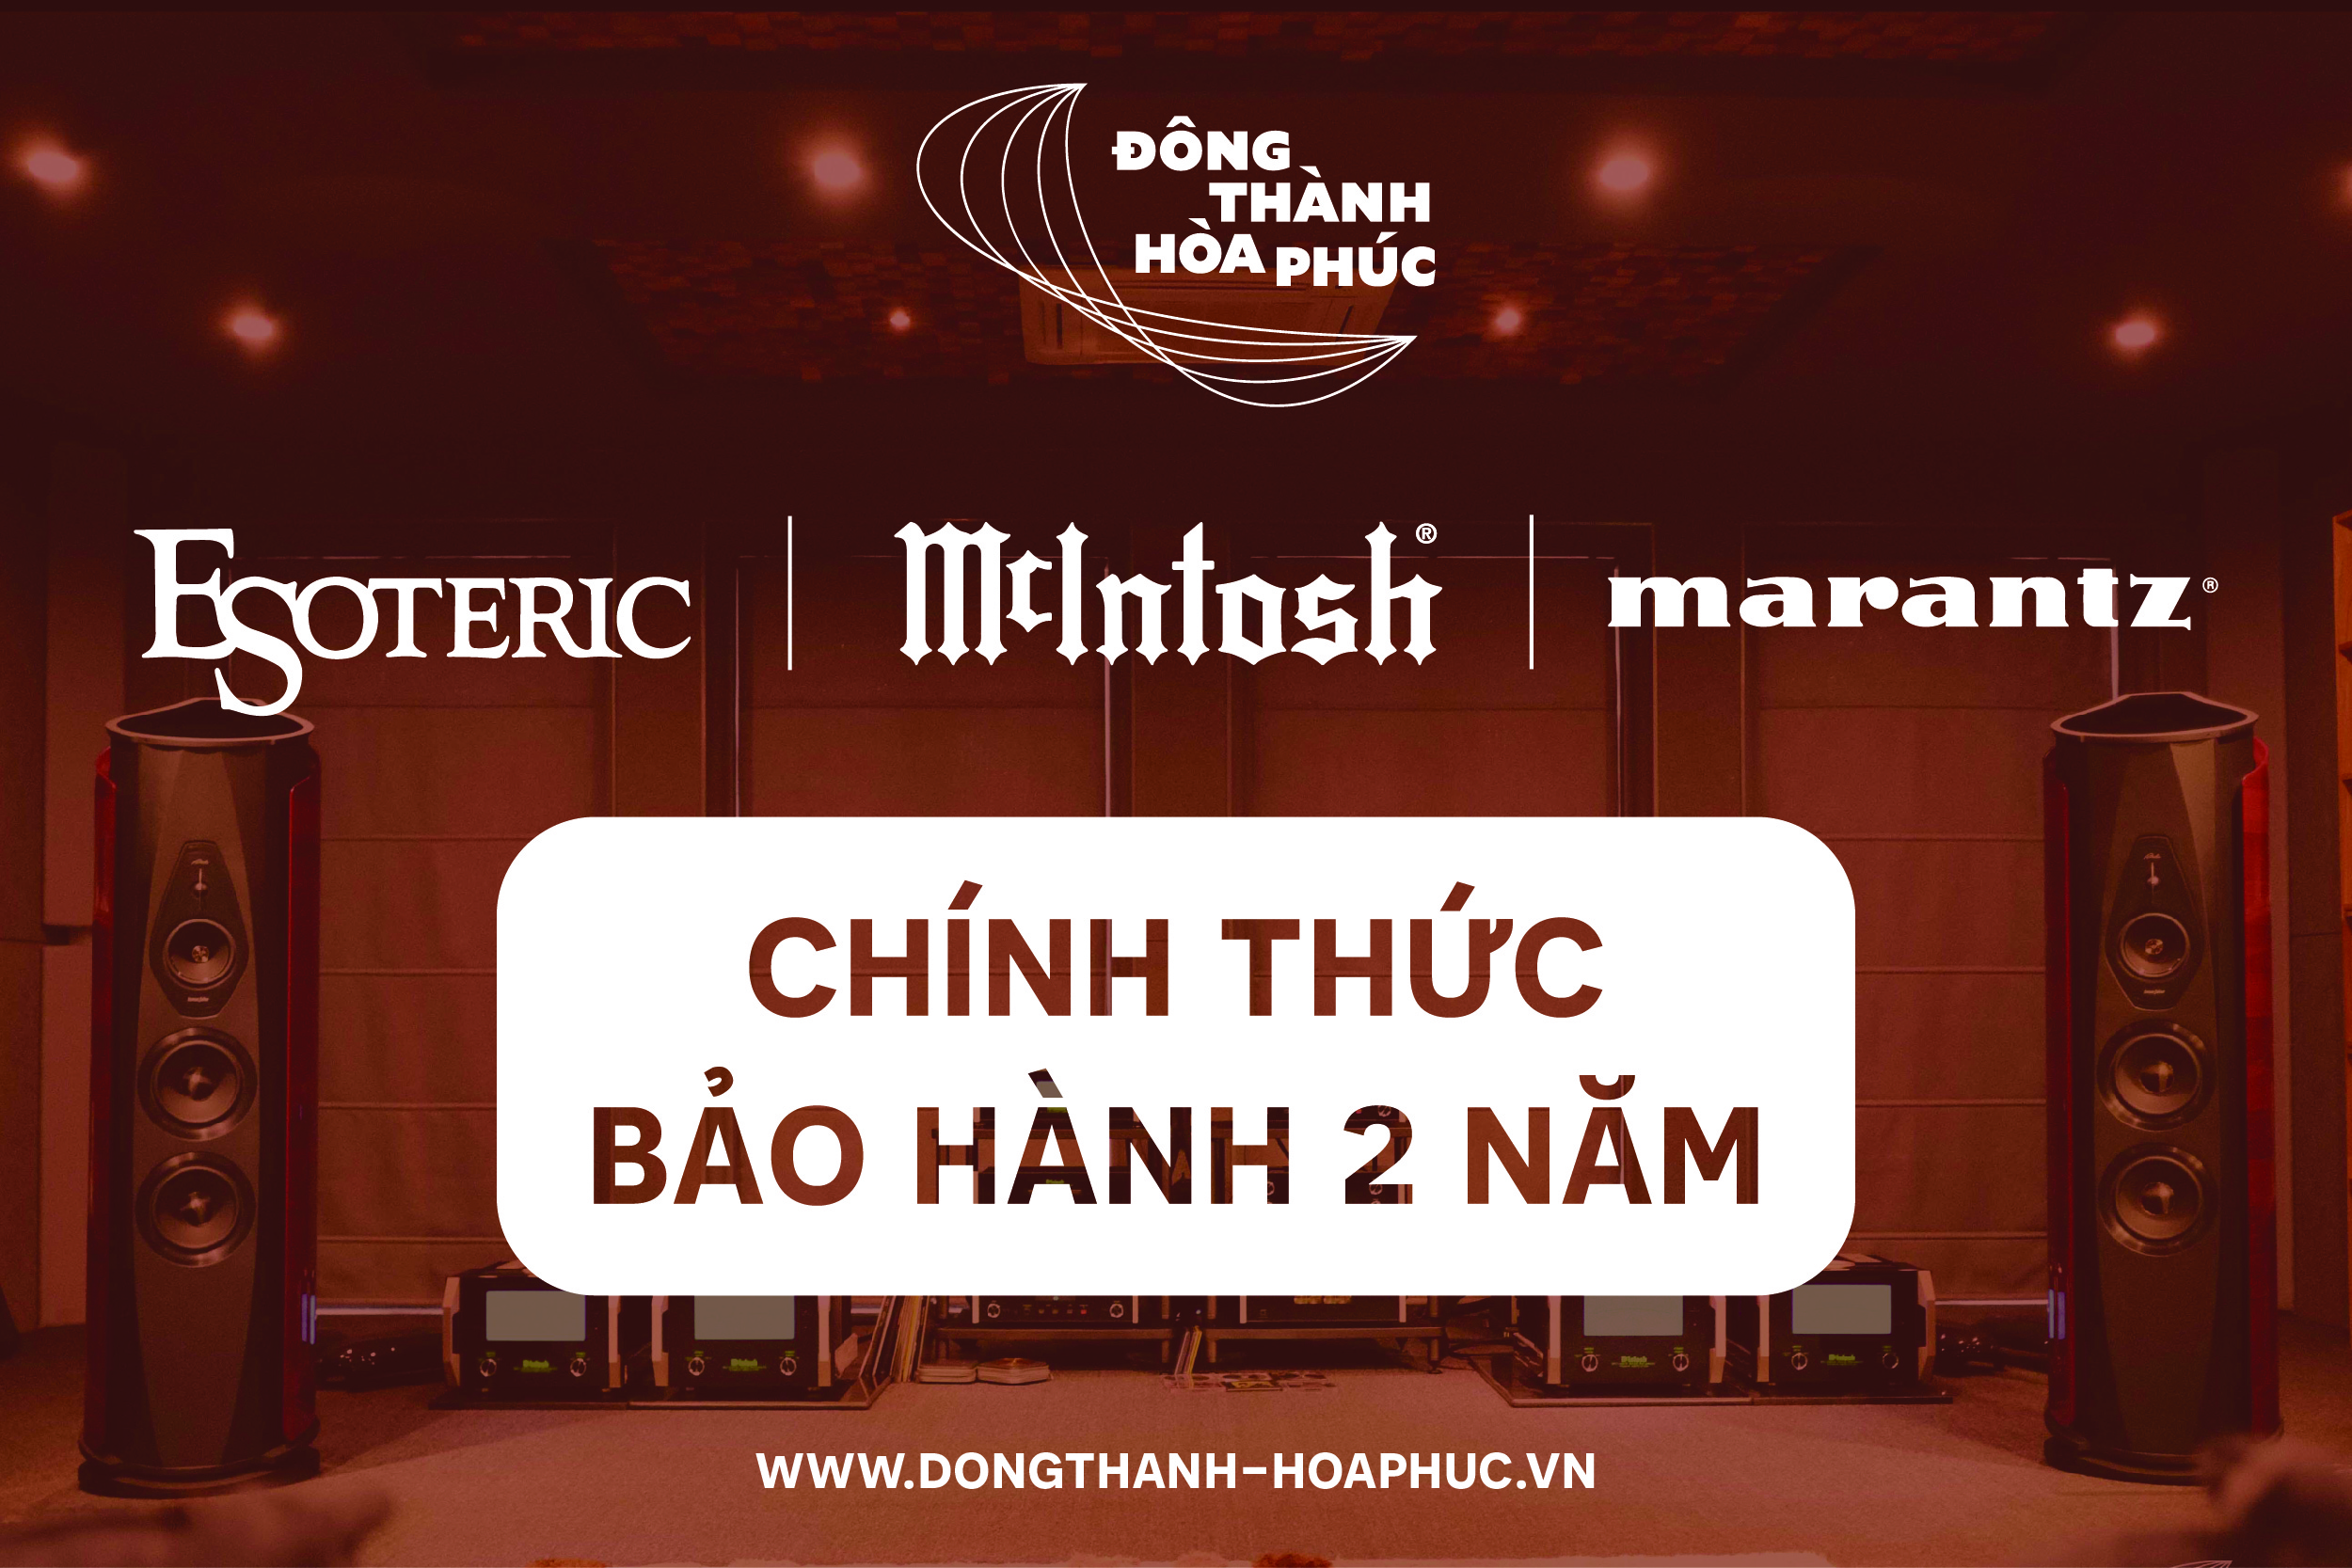 DongThanhHoaPhuc-McIntosh_Marantz-Esoteric-bao hanh 2 nam-01.jpg